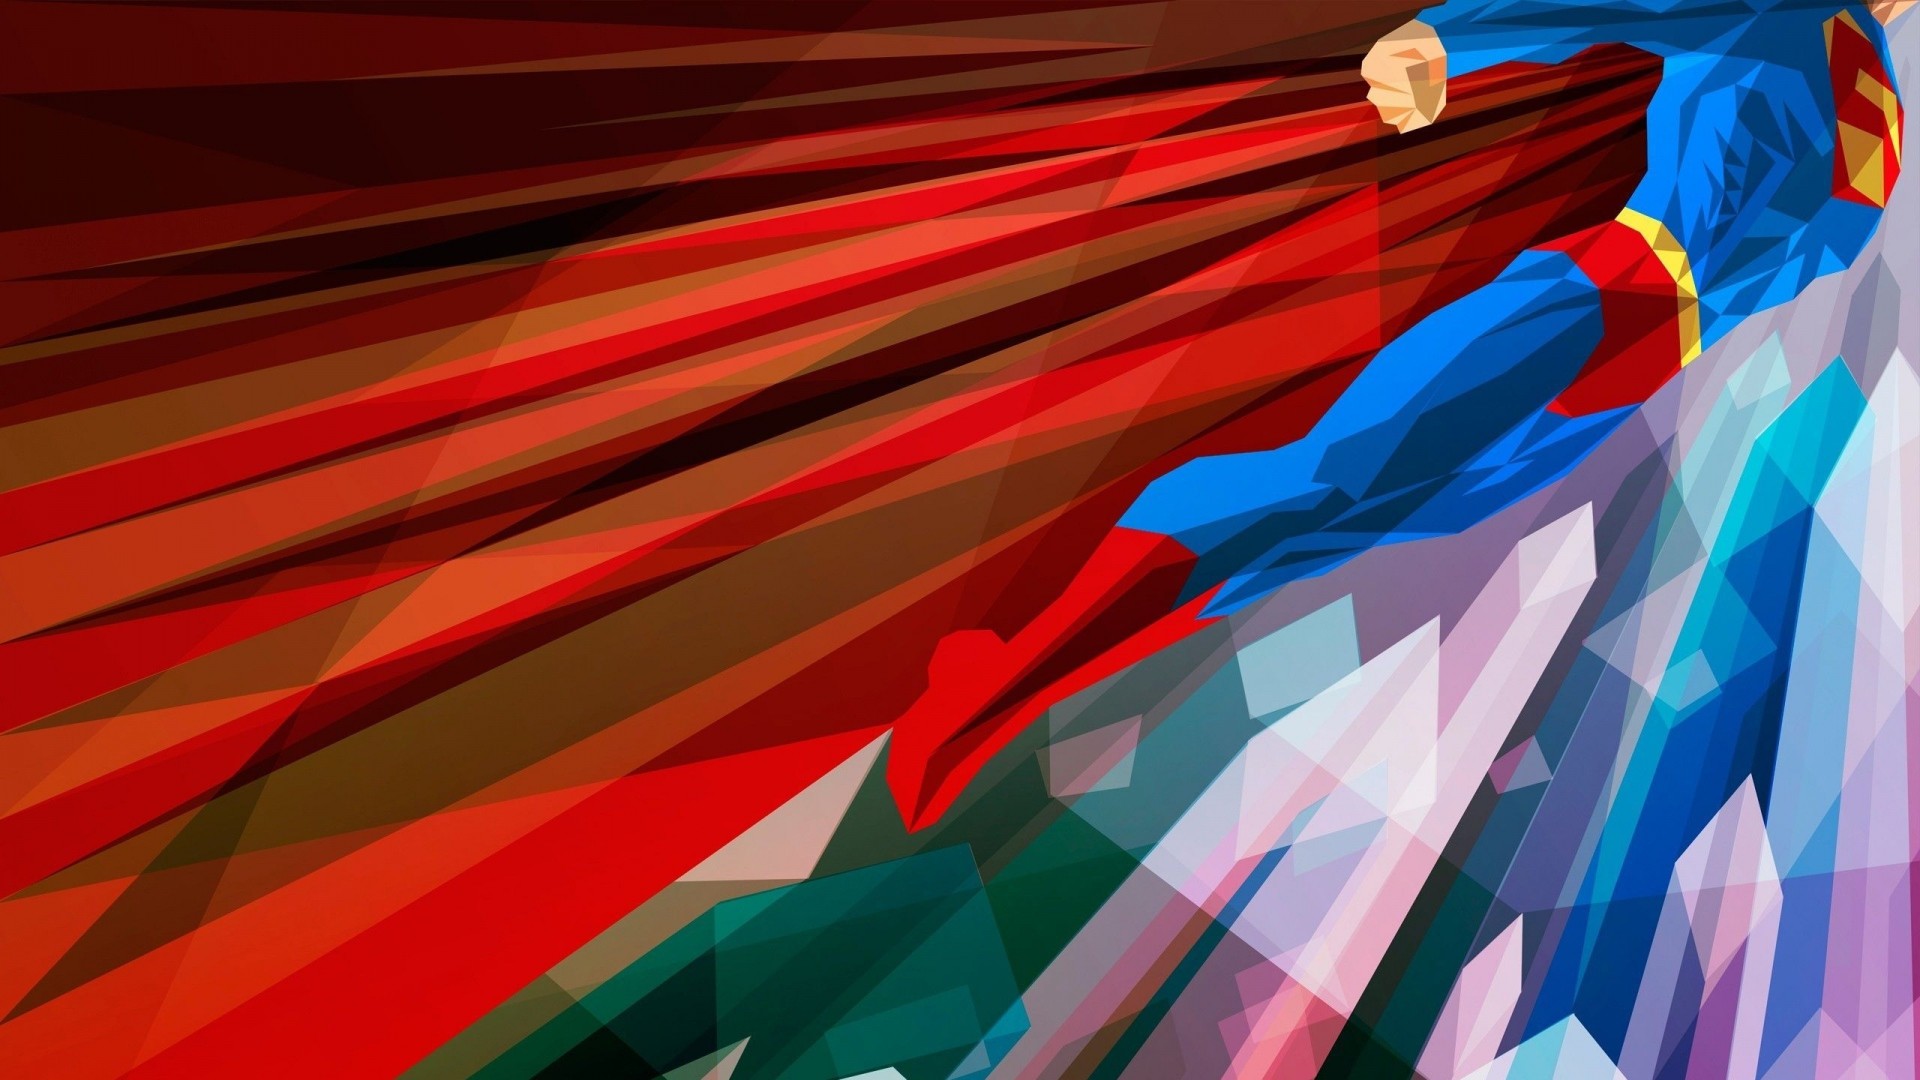 Background Full HD 1080p. Wallpaper superhero, superman, bright